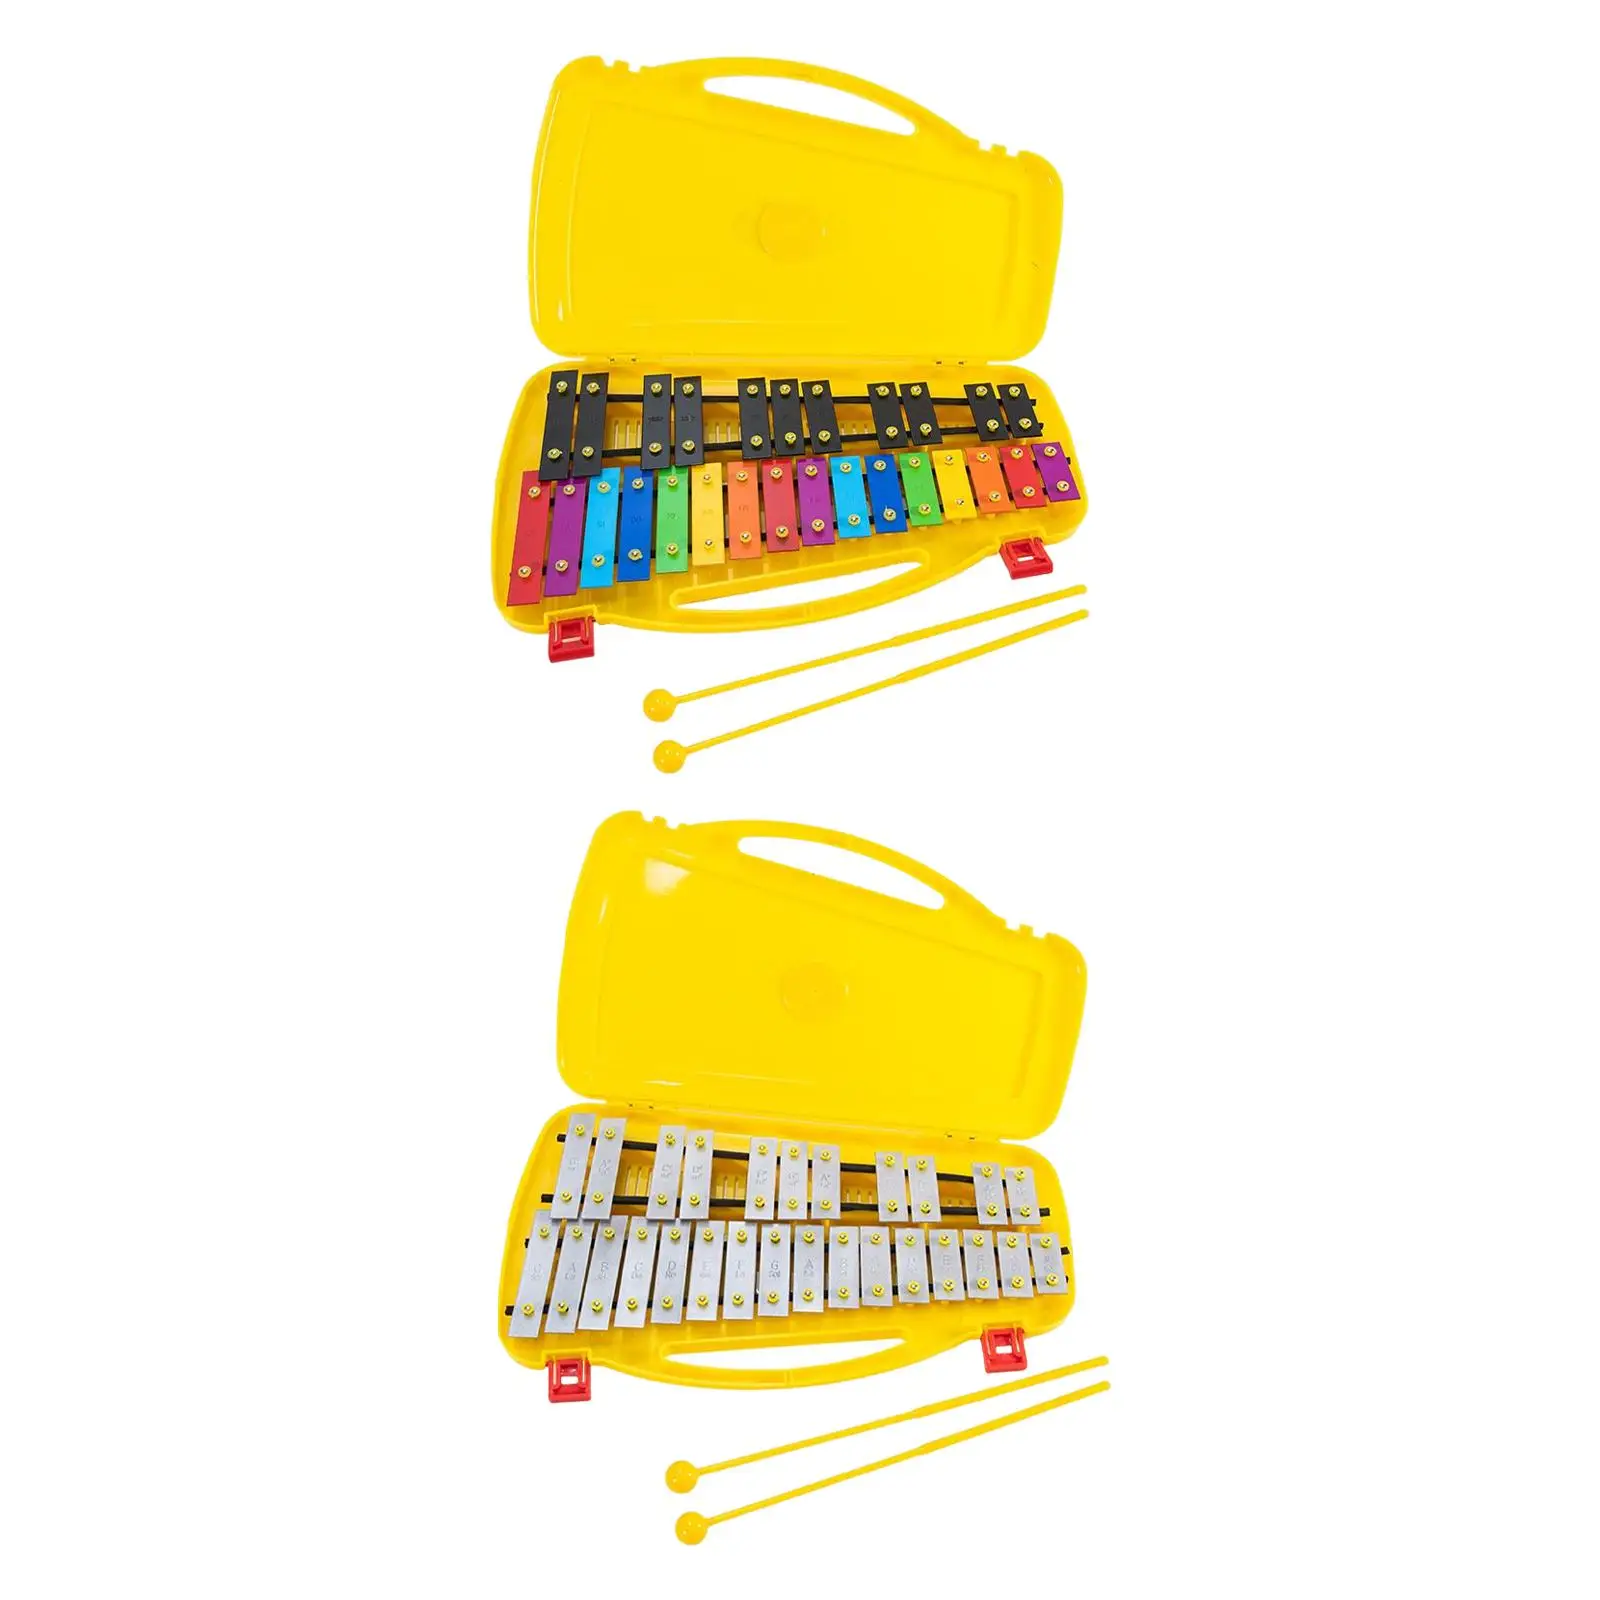 Glockenspiel 27 Note Xylophone for Preschool Beginners Adult Percussion